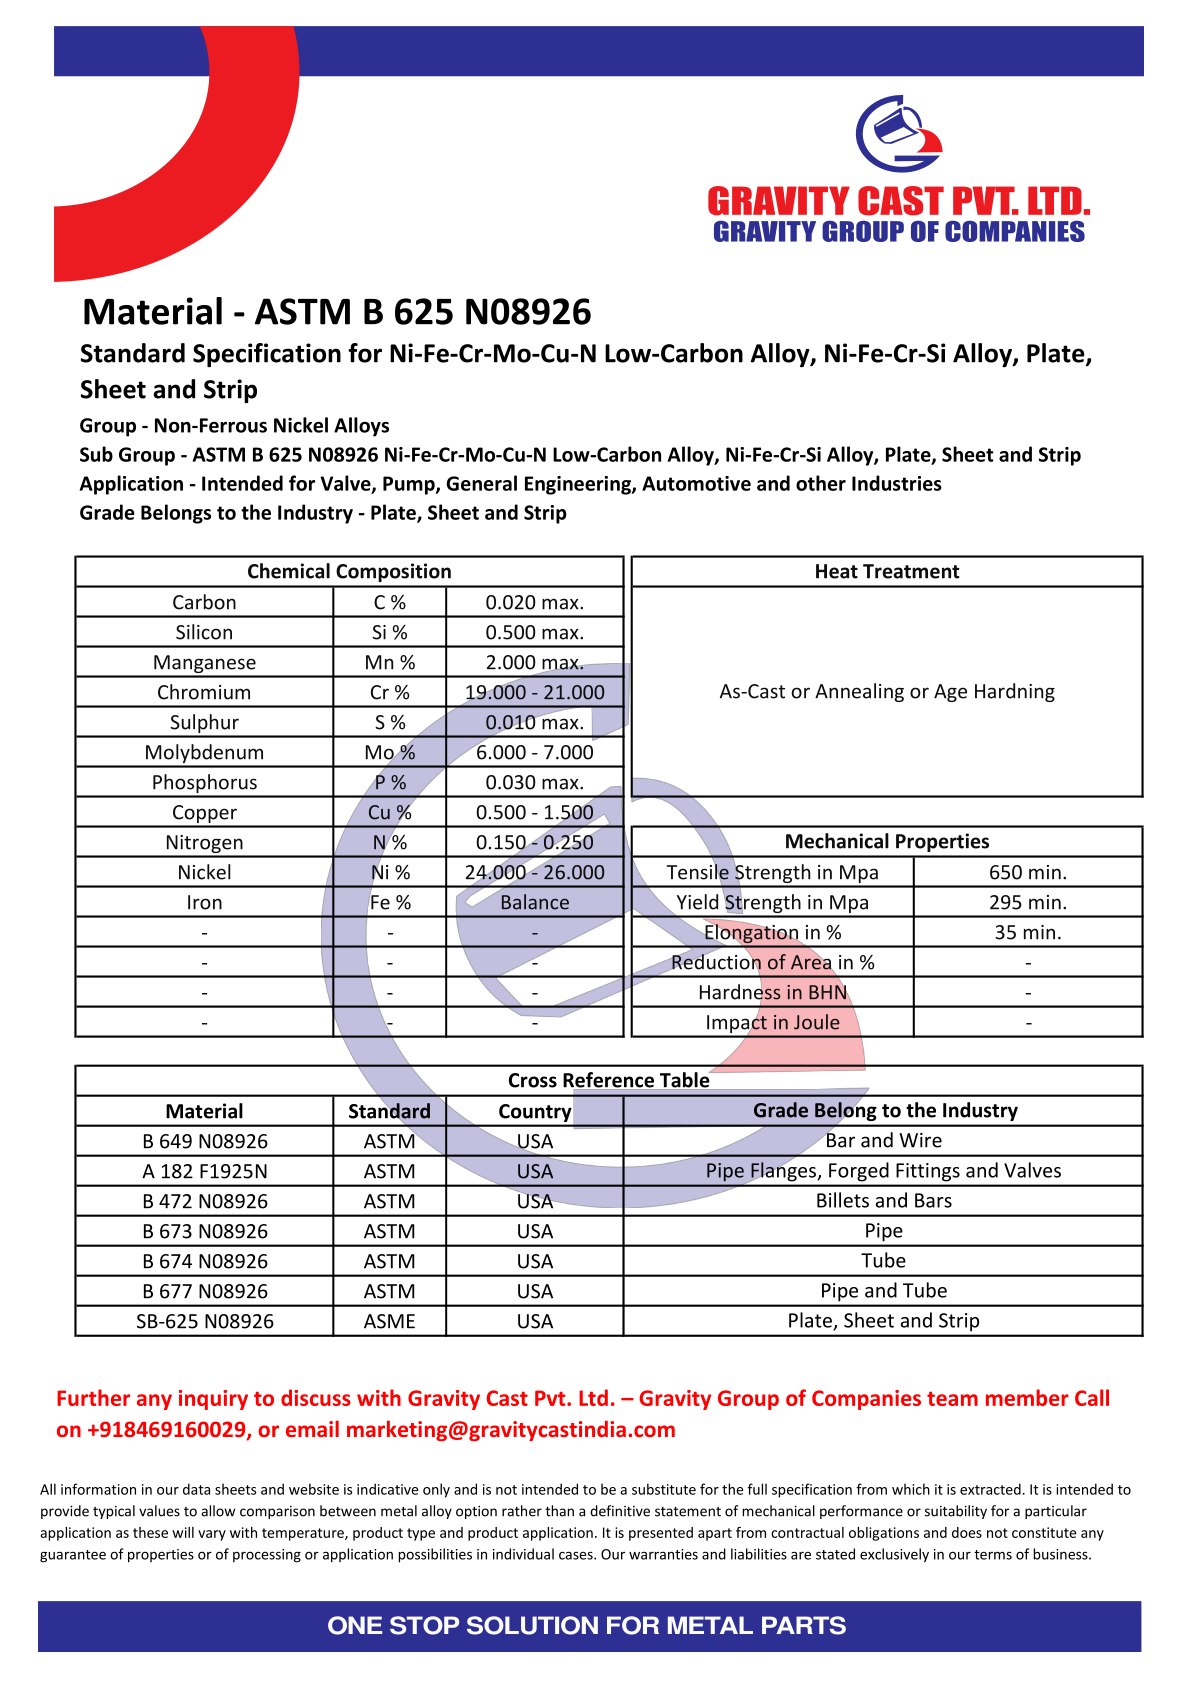 ASTM B 625 N08926.pdf